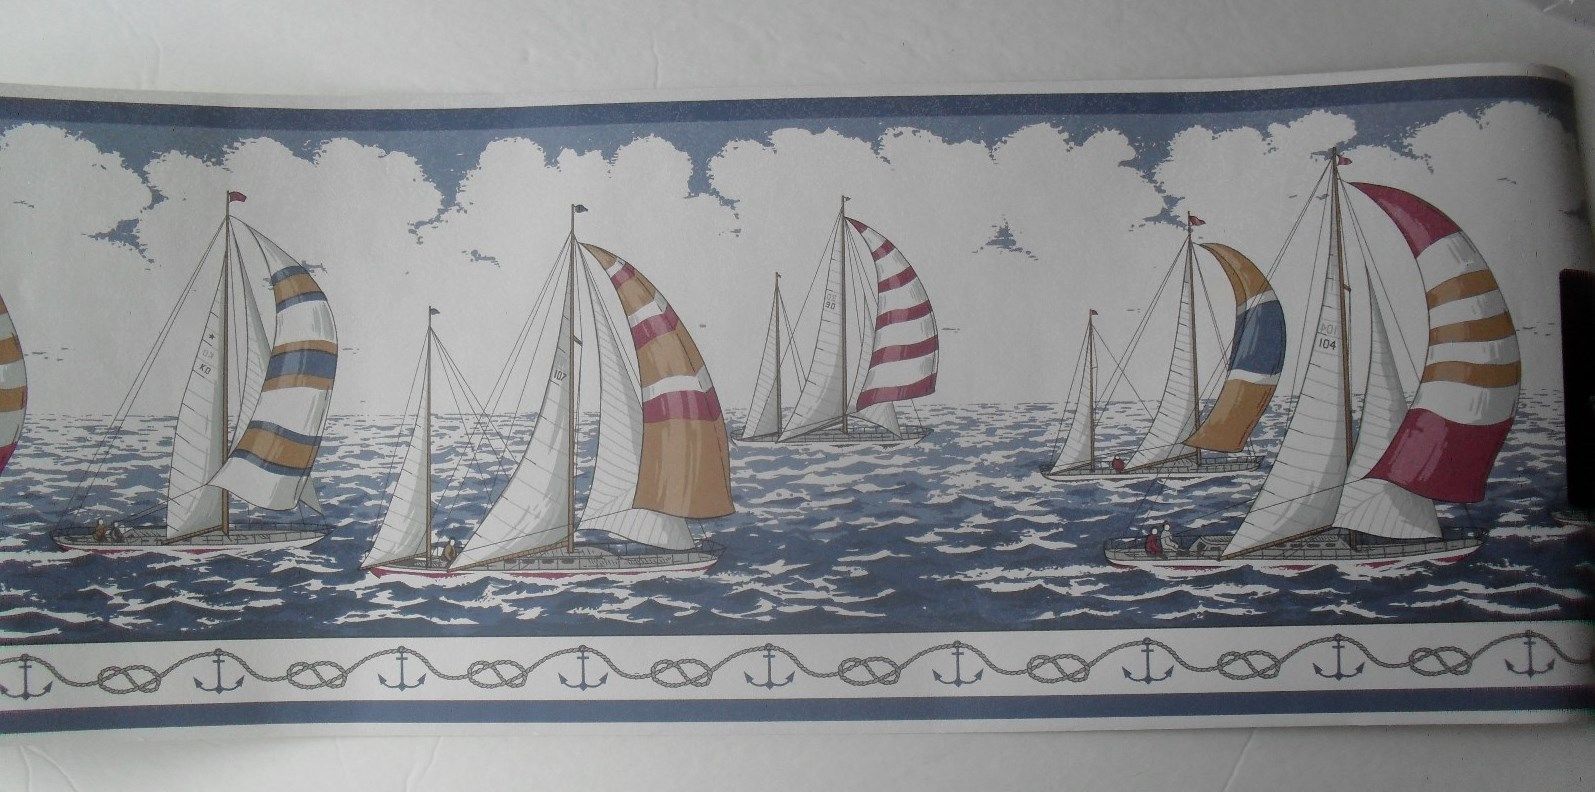 Nautical Rope Wallpaper Border Joy Studio Design Gallery Best